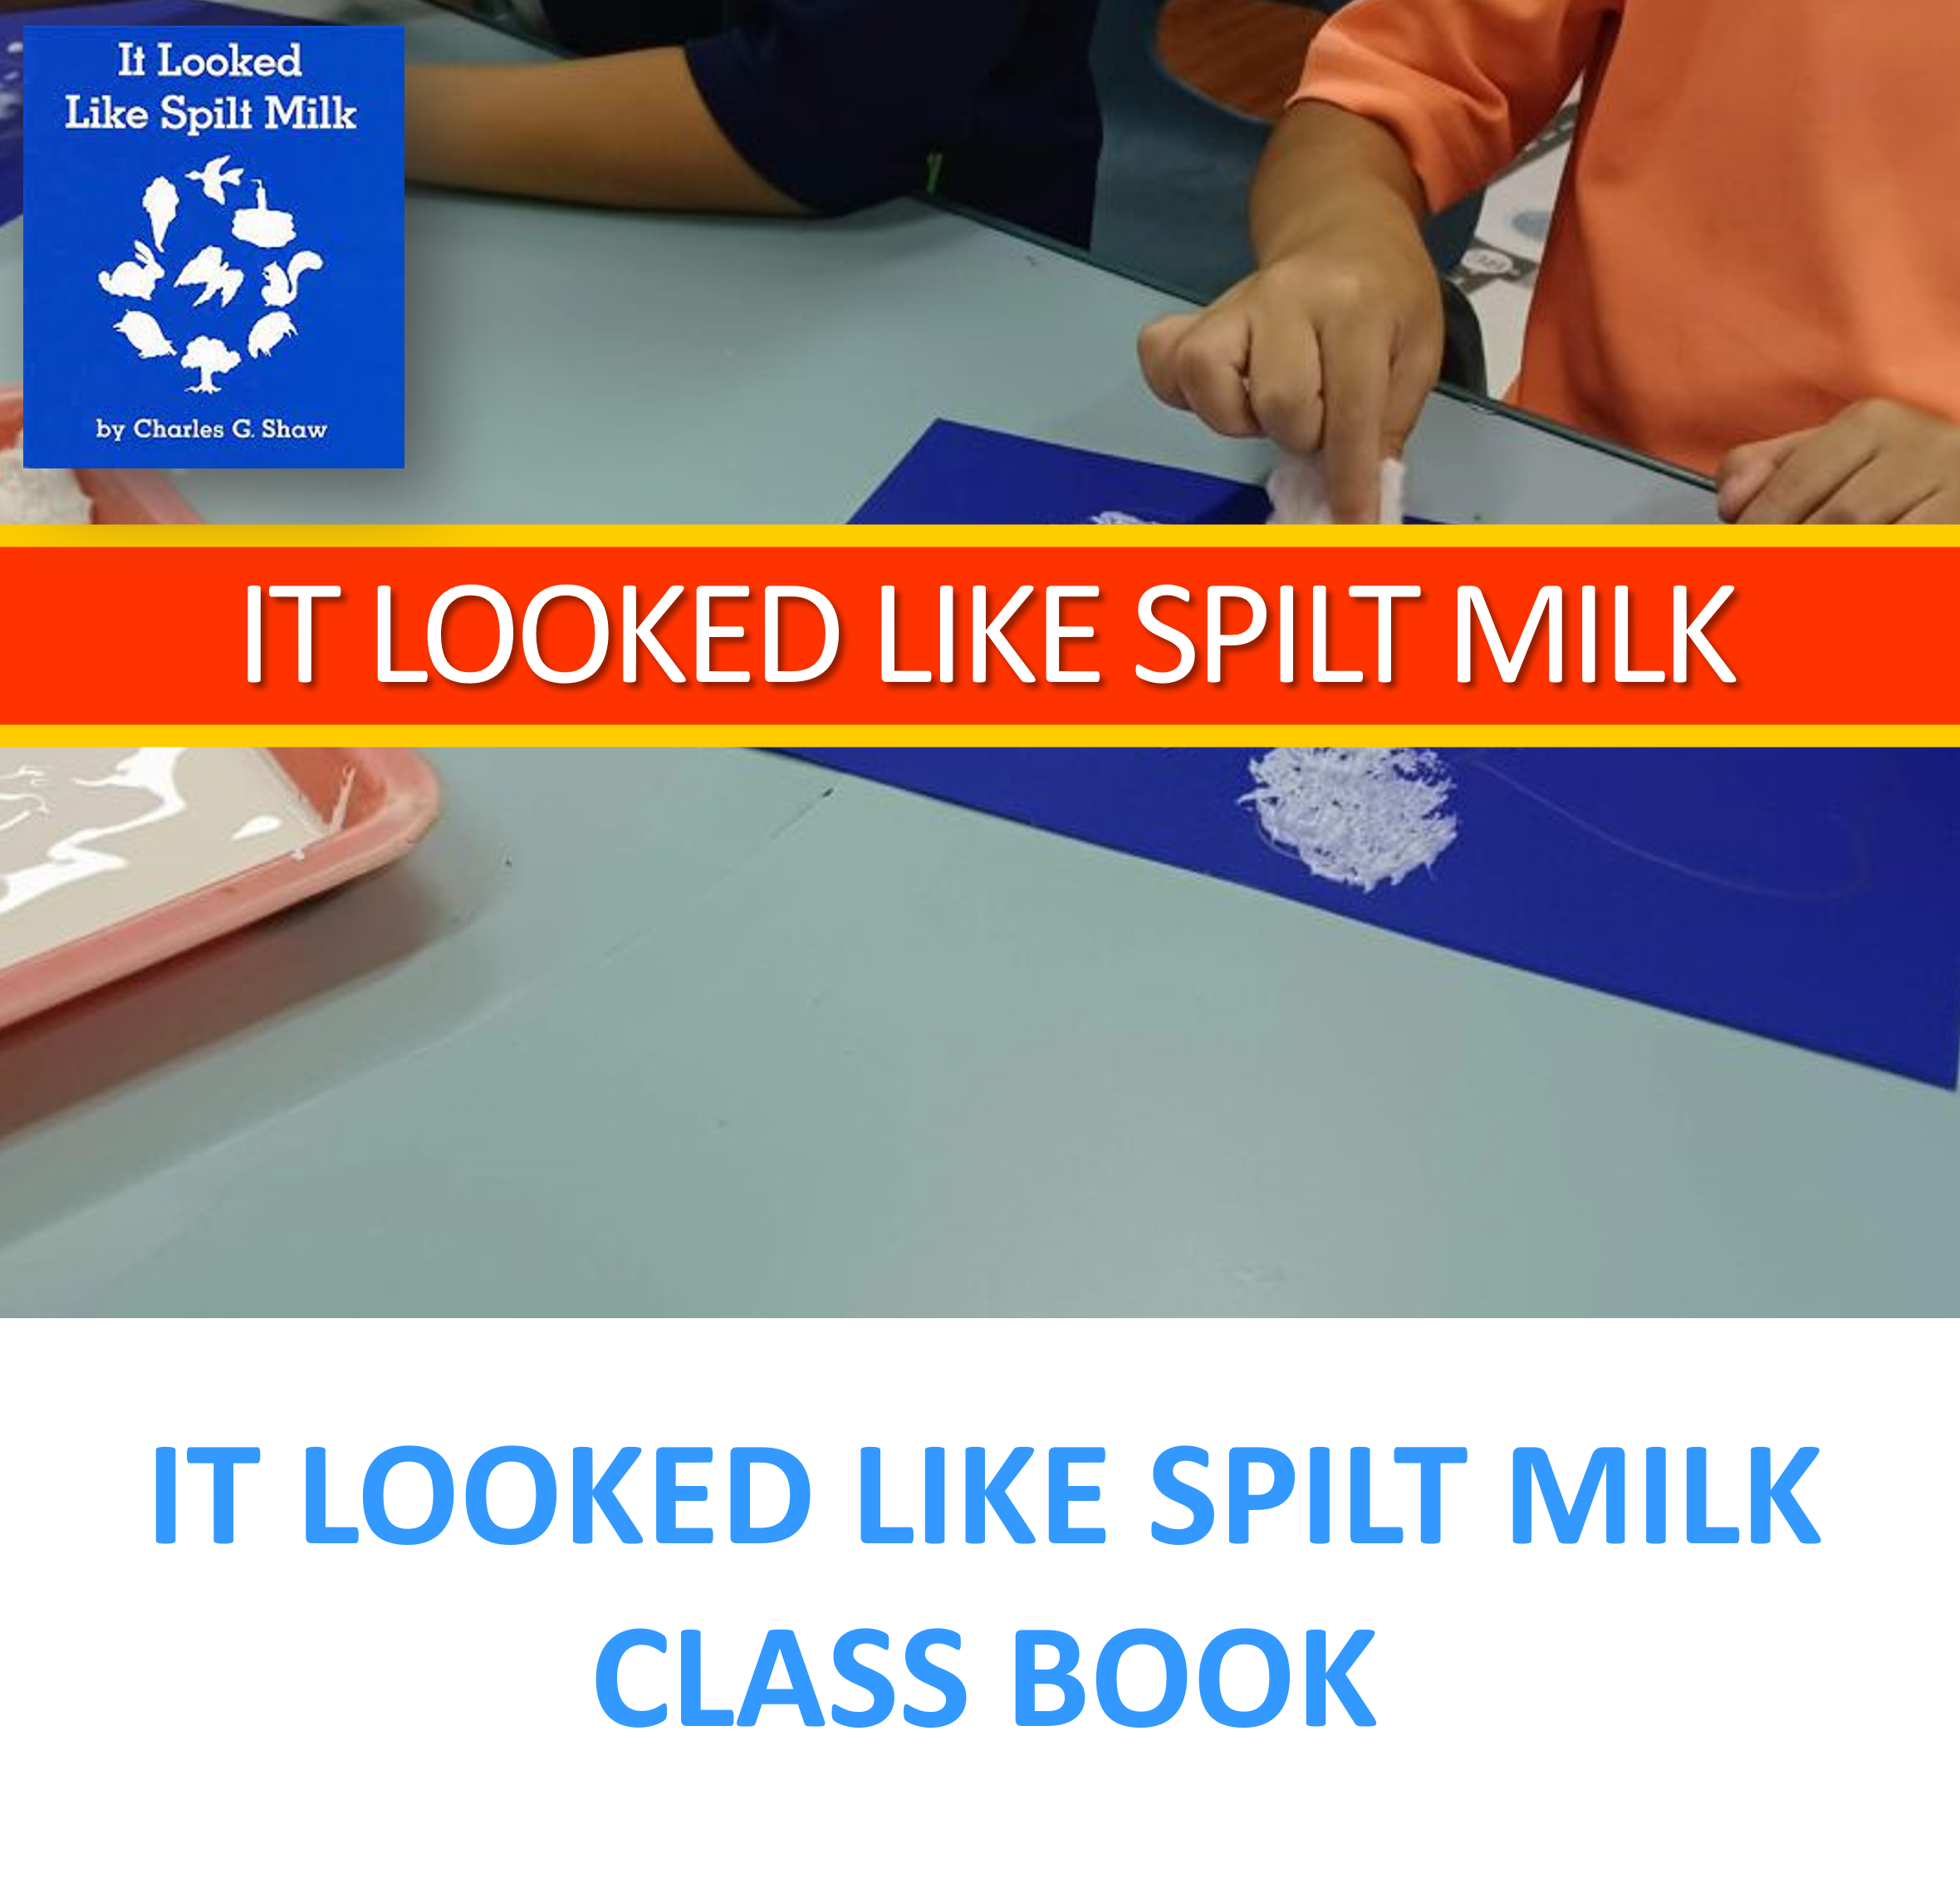 It looked like spilt milk activities